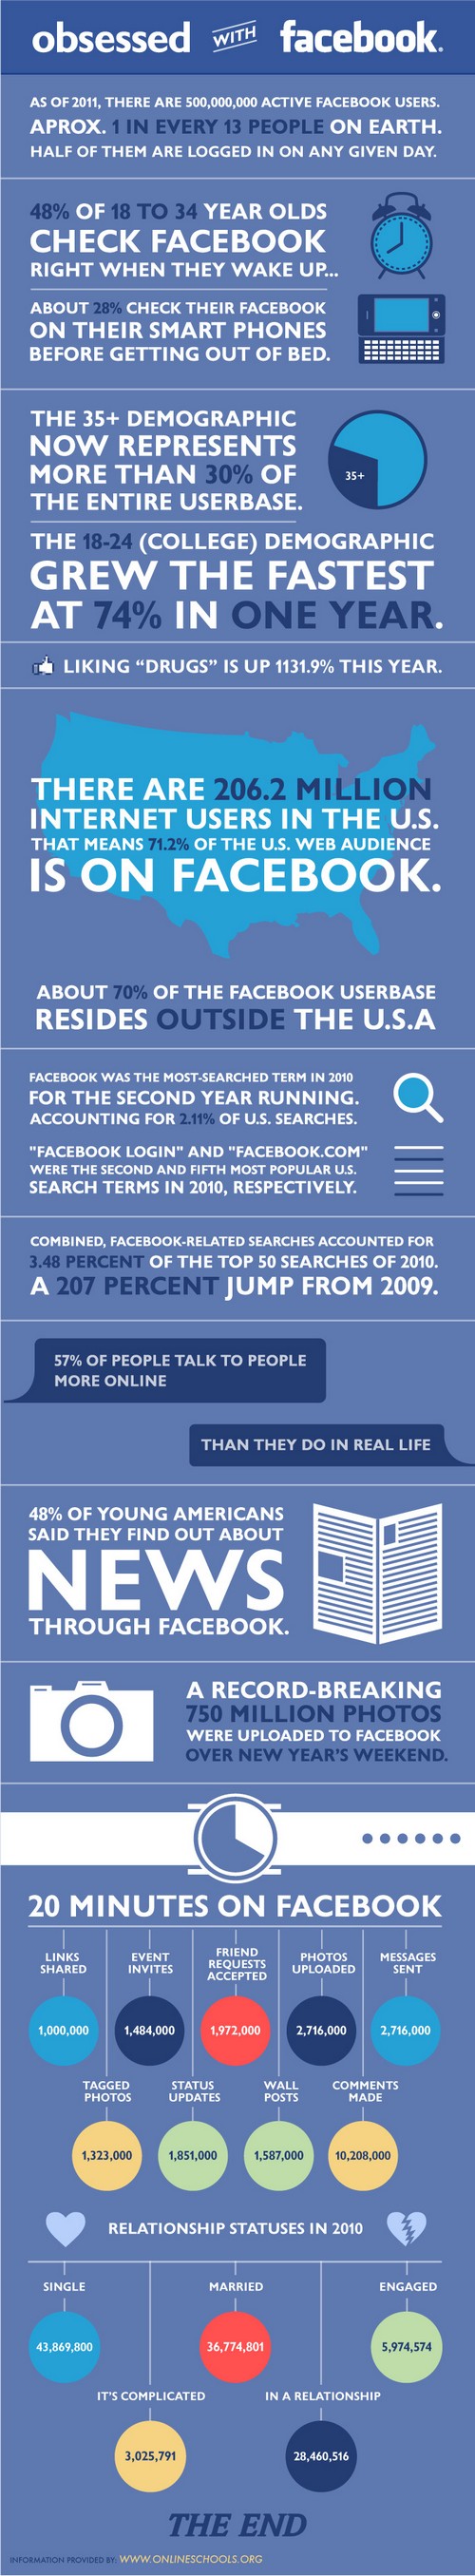 ¿Estamos obsesionados con Facebook? [Infografía] 2